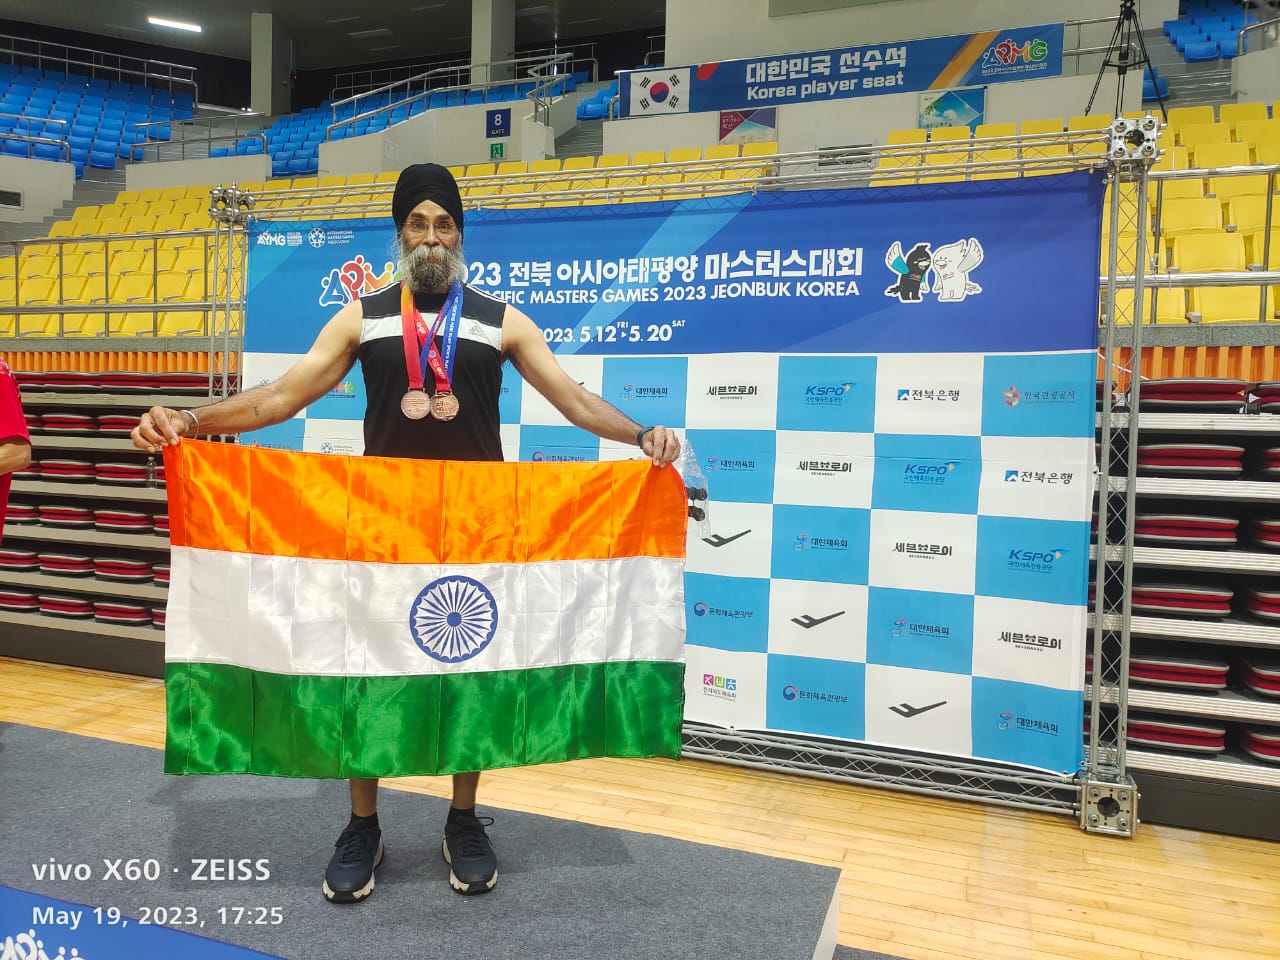 Pune's Raj Singh Impresses at Asia Pacific Masters, Grabs Bronze in Badminton